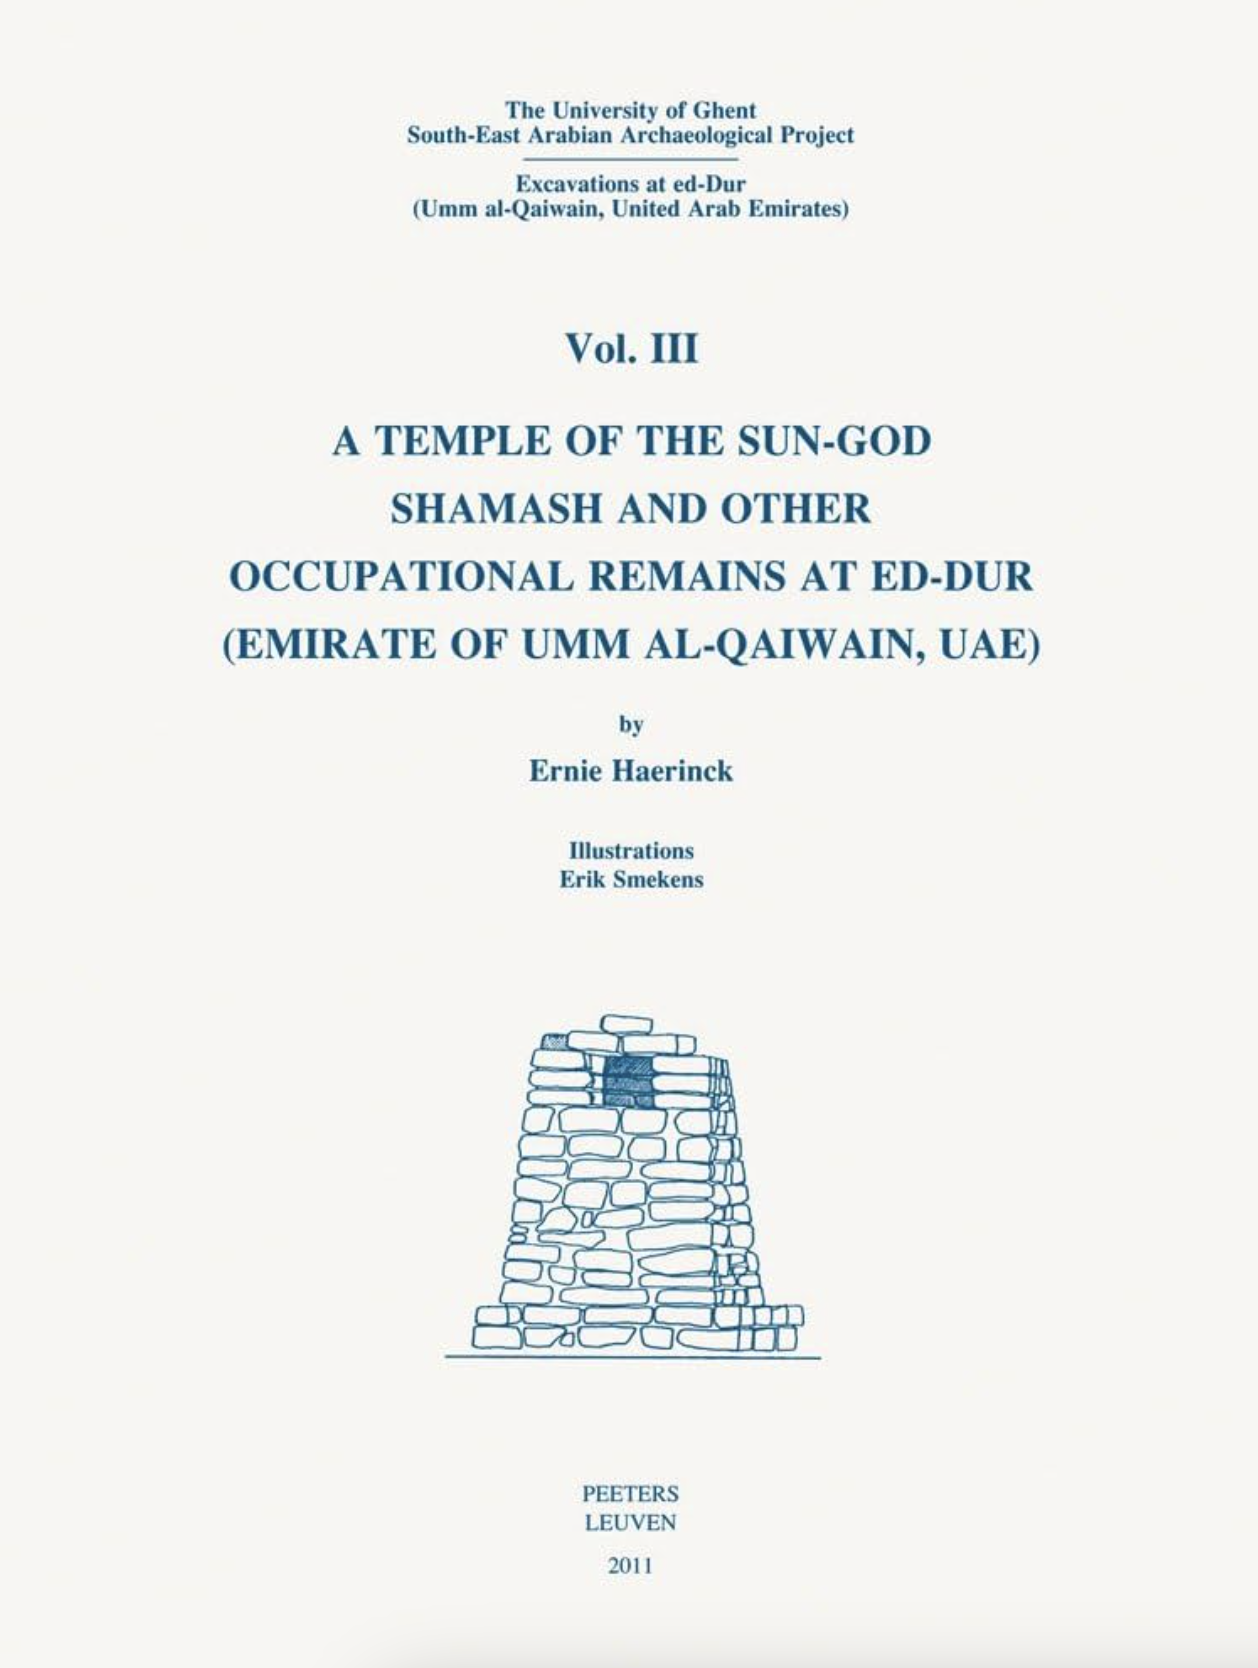 Excavations at Ed-Dur (Umm al-Qaiwain, United Arab Emirates). Vol. III, A temple of the sun-god Shamash and other occupational remains at Ed-Dur (Emirate of Umm Al-Qaiwain, UAE)